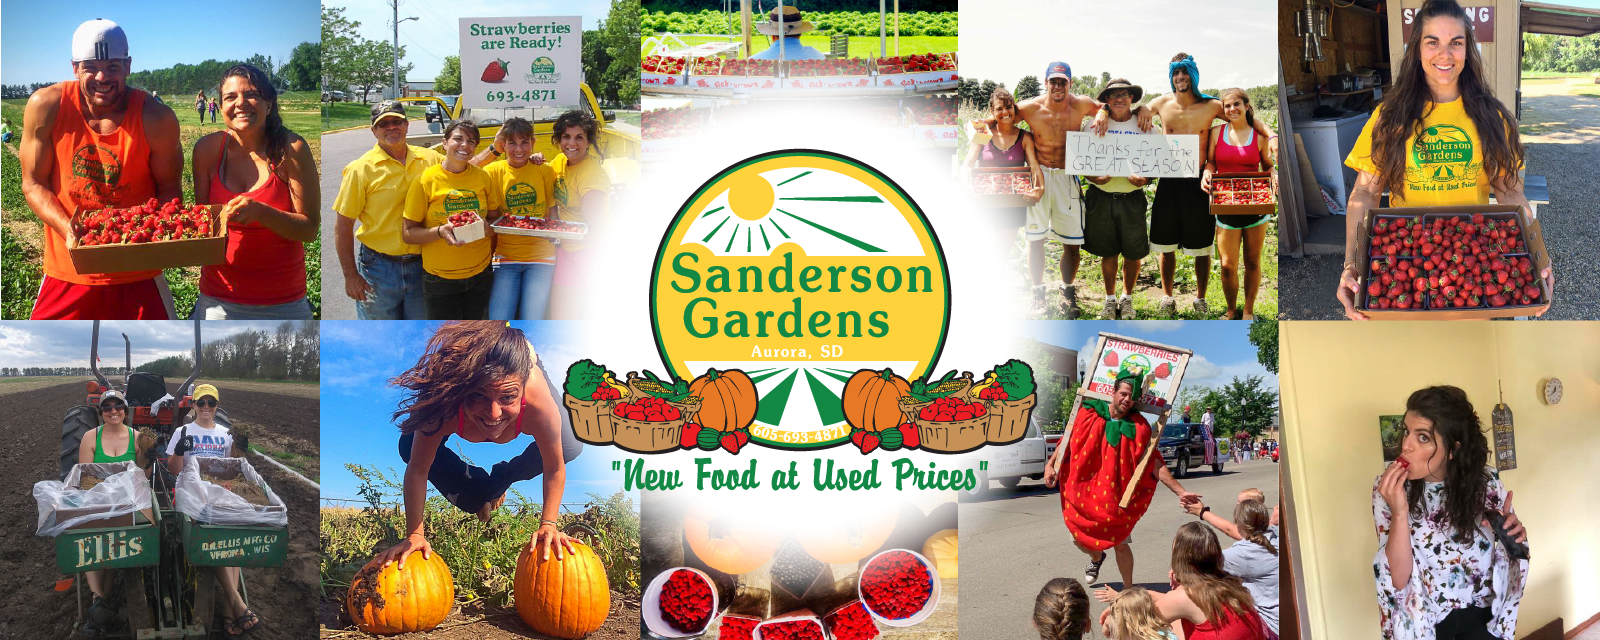 Sanderson Gardens | Public Garden in Brookings, SD